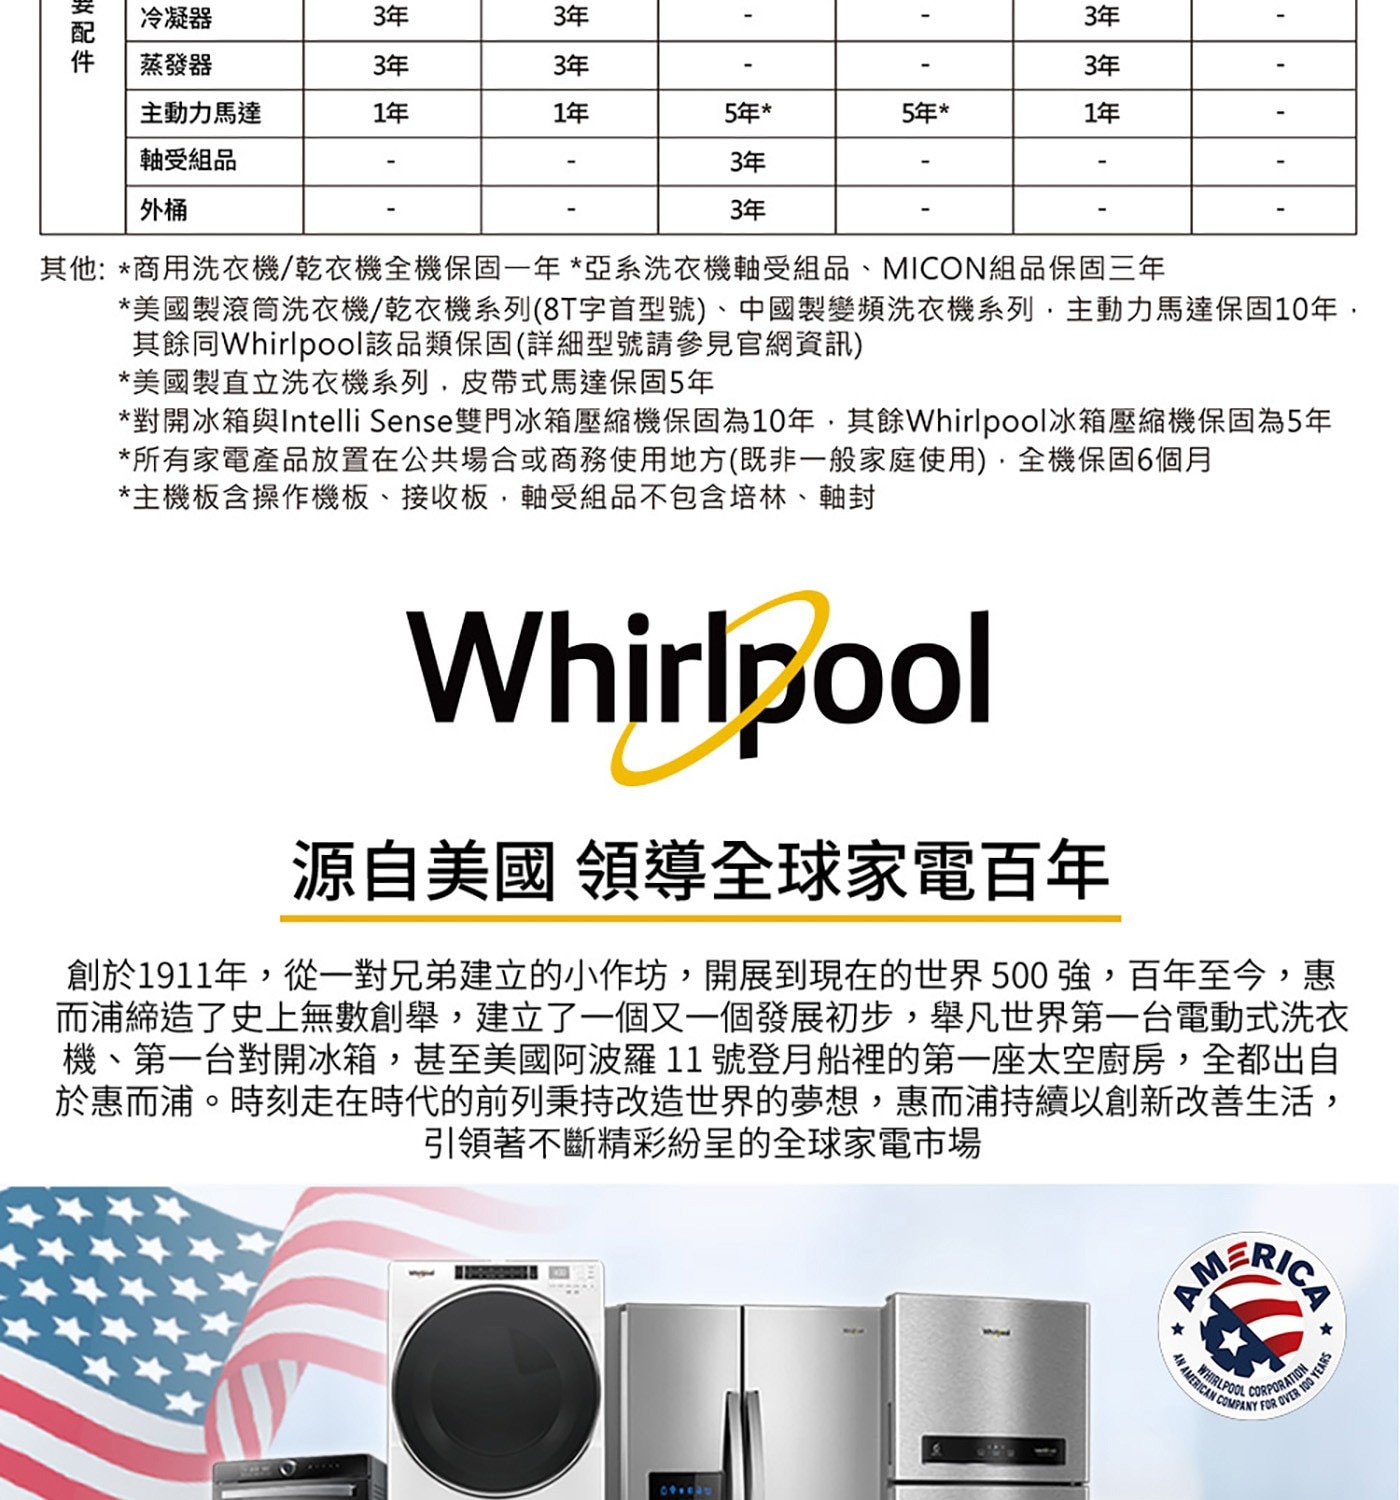 Whirlpool 19公斤 洗衣機